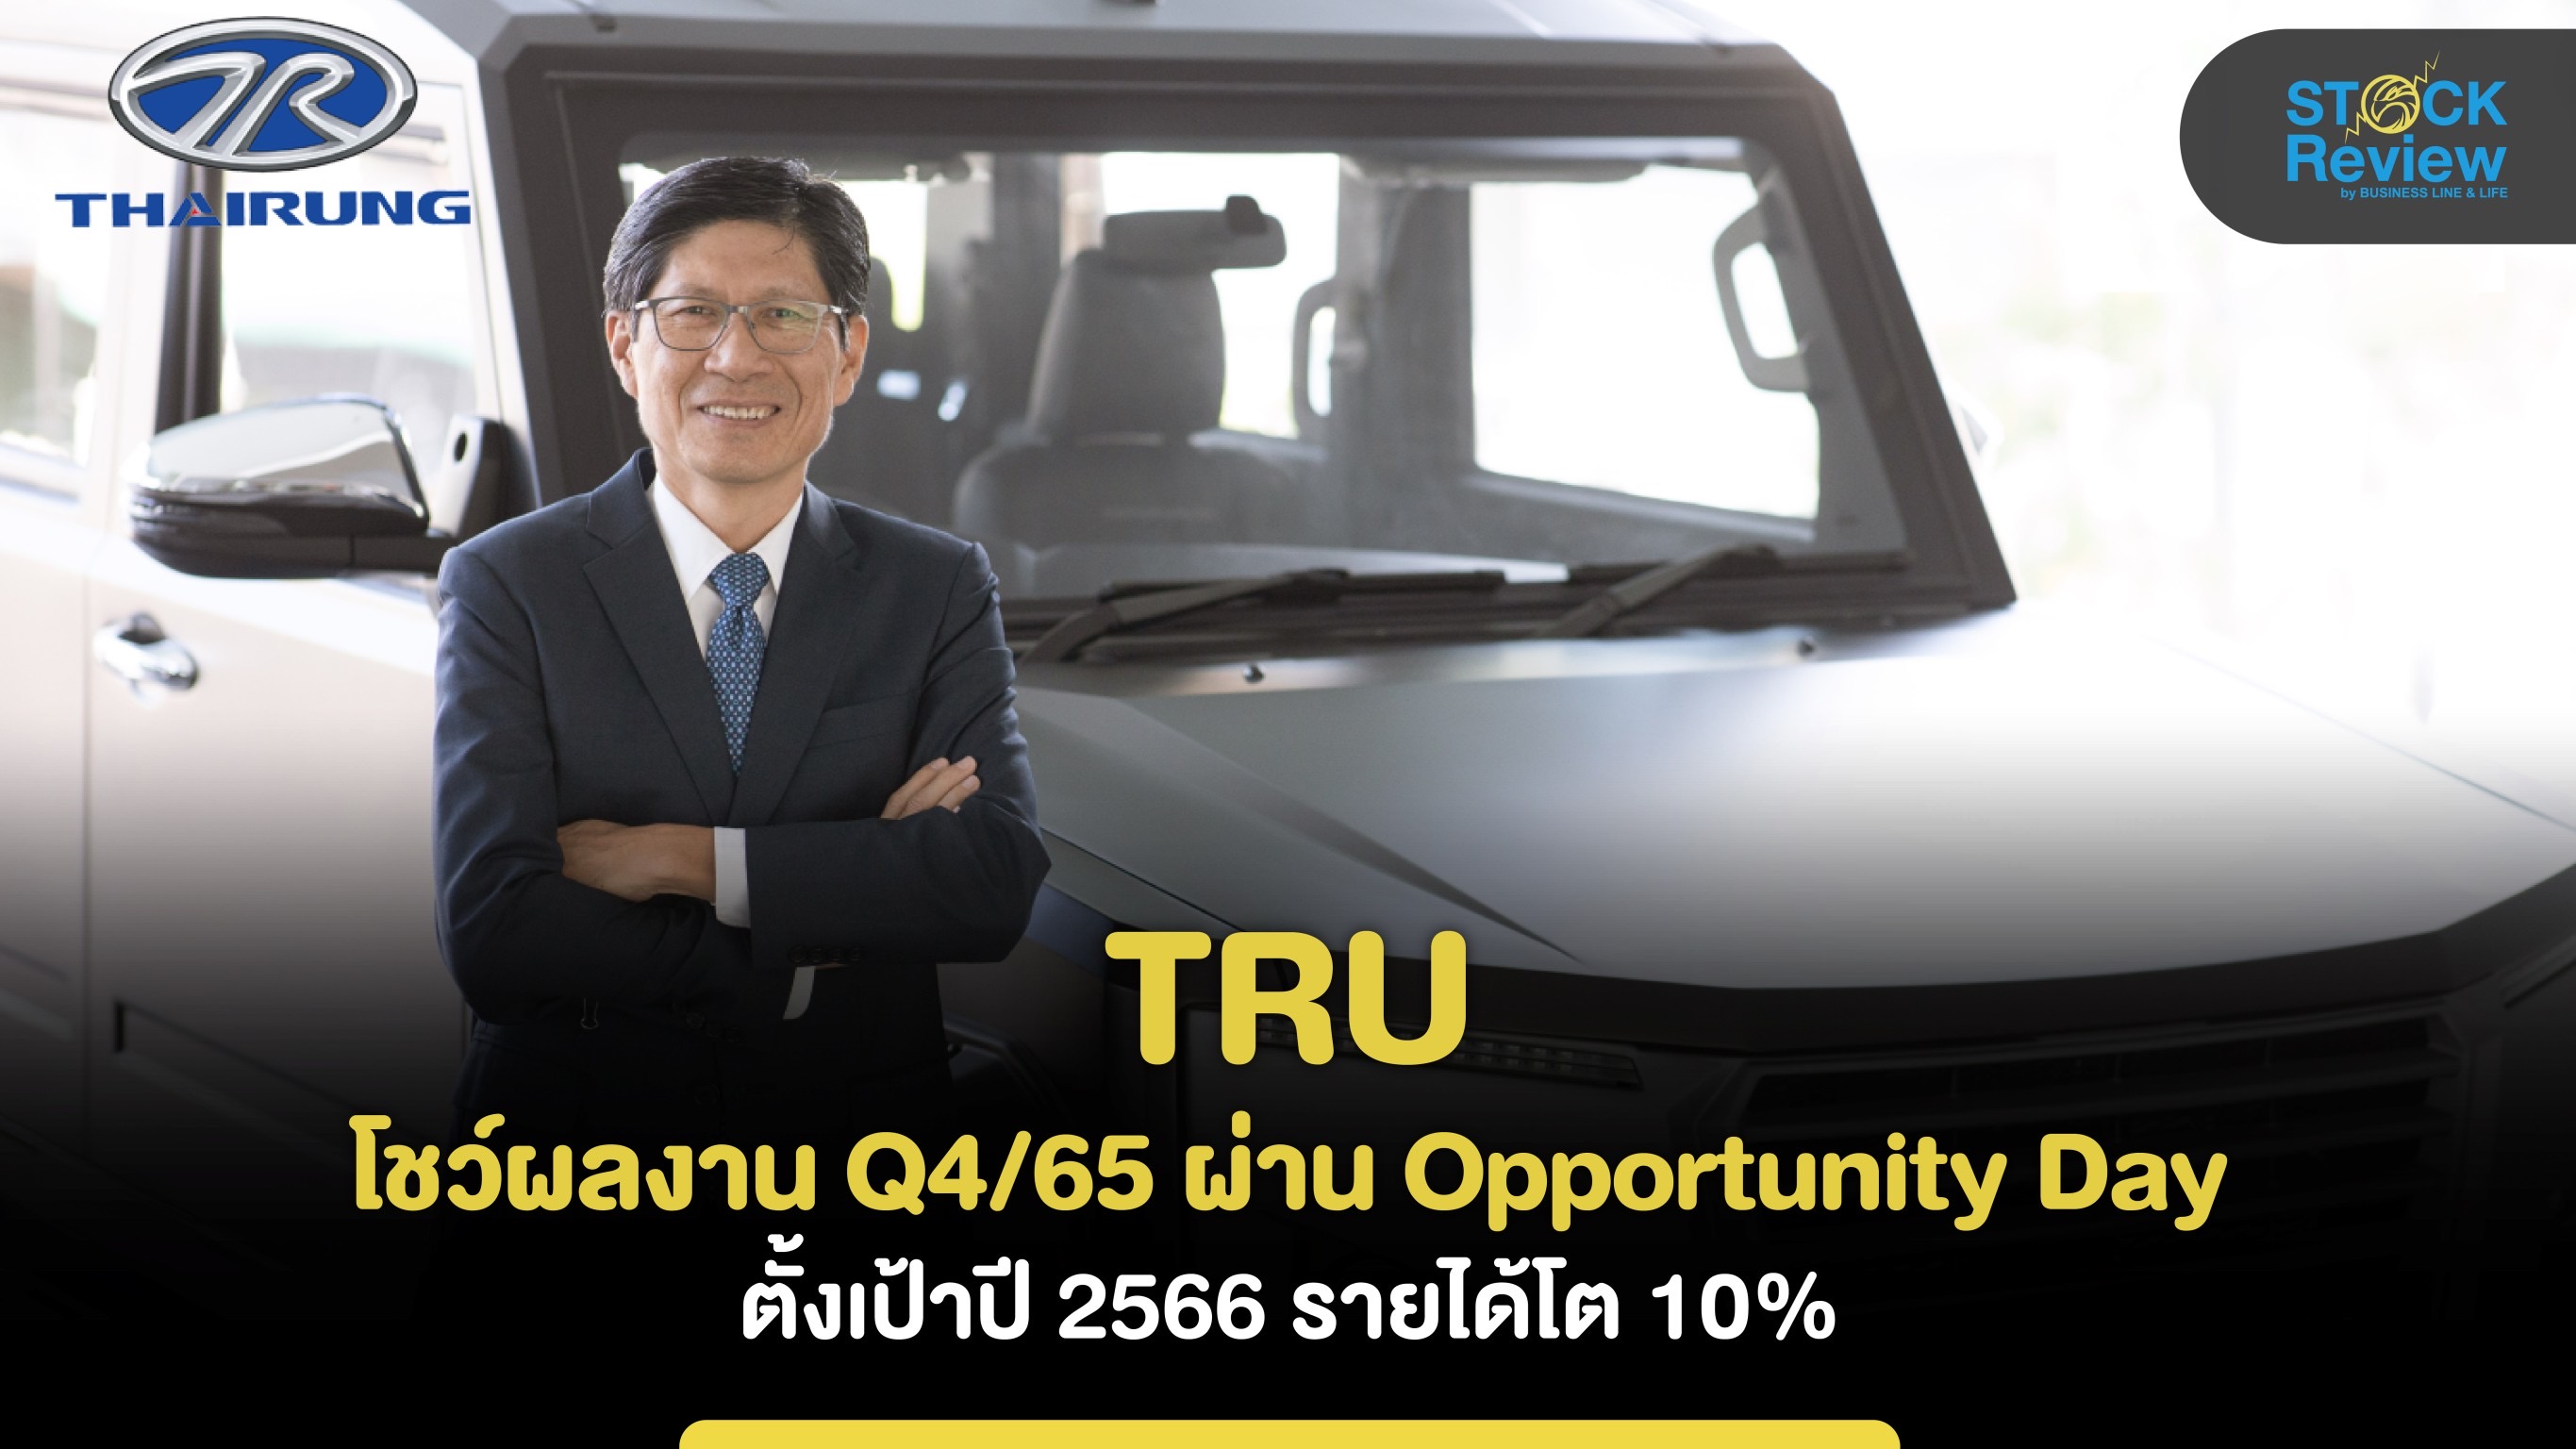 TRU โชว์ผลงาน Q4/65 ผ่าน Opportunity Day ตั้งเป้าปี 2566 รายได้โต 10%